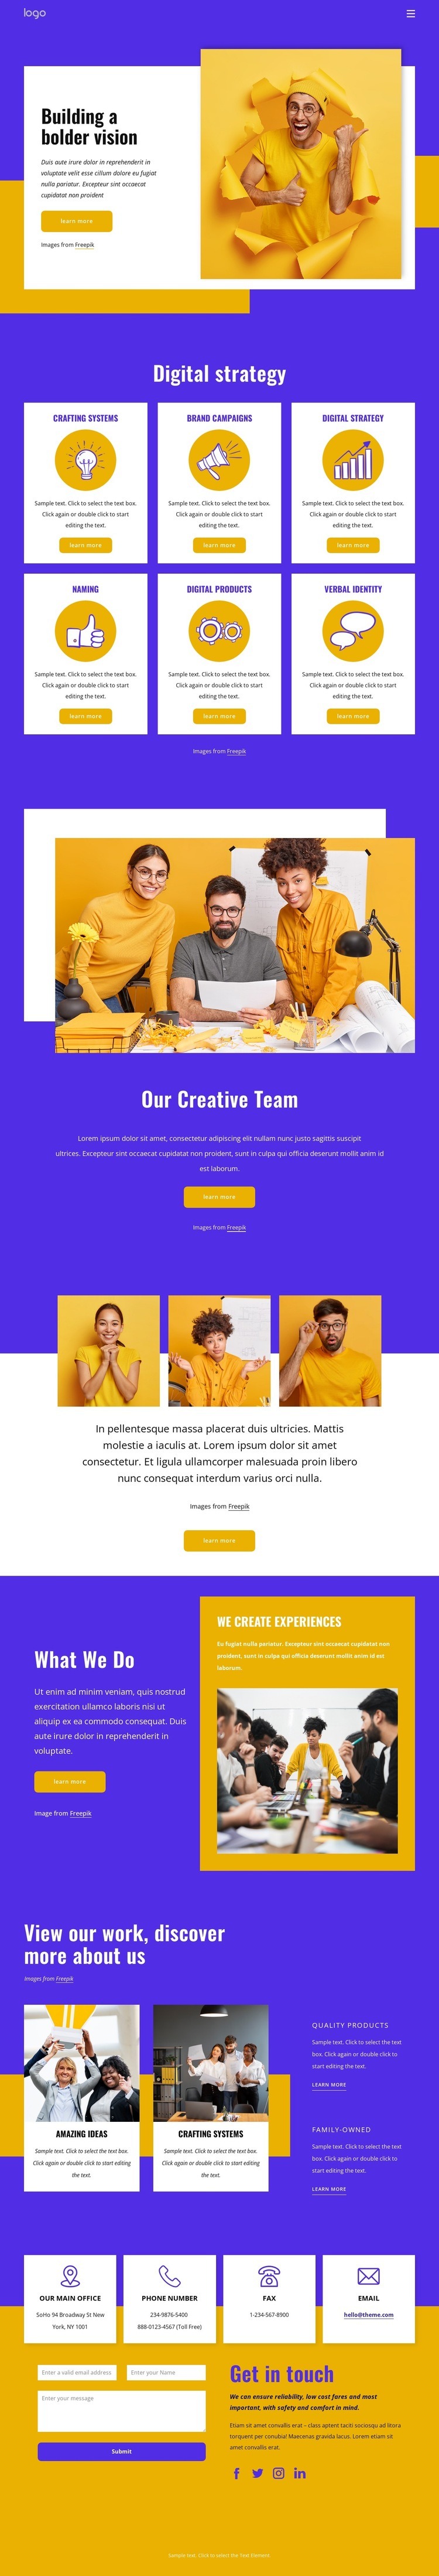 UX design and branding agency Web Page Designer